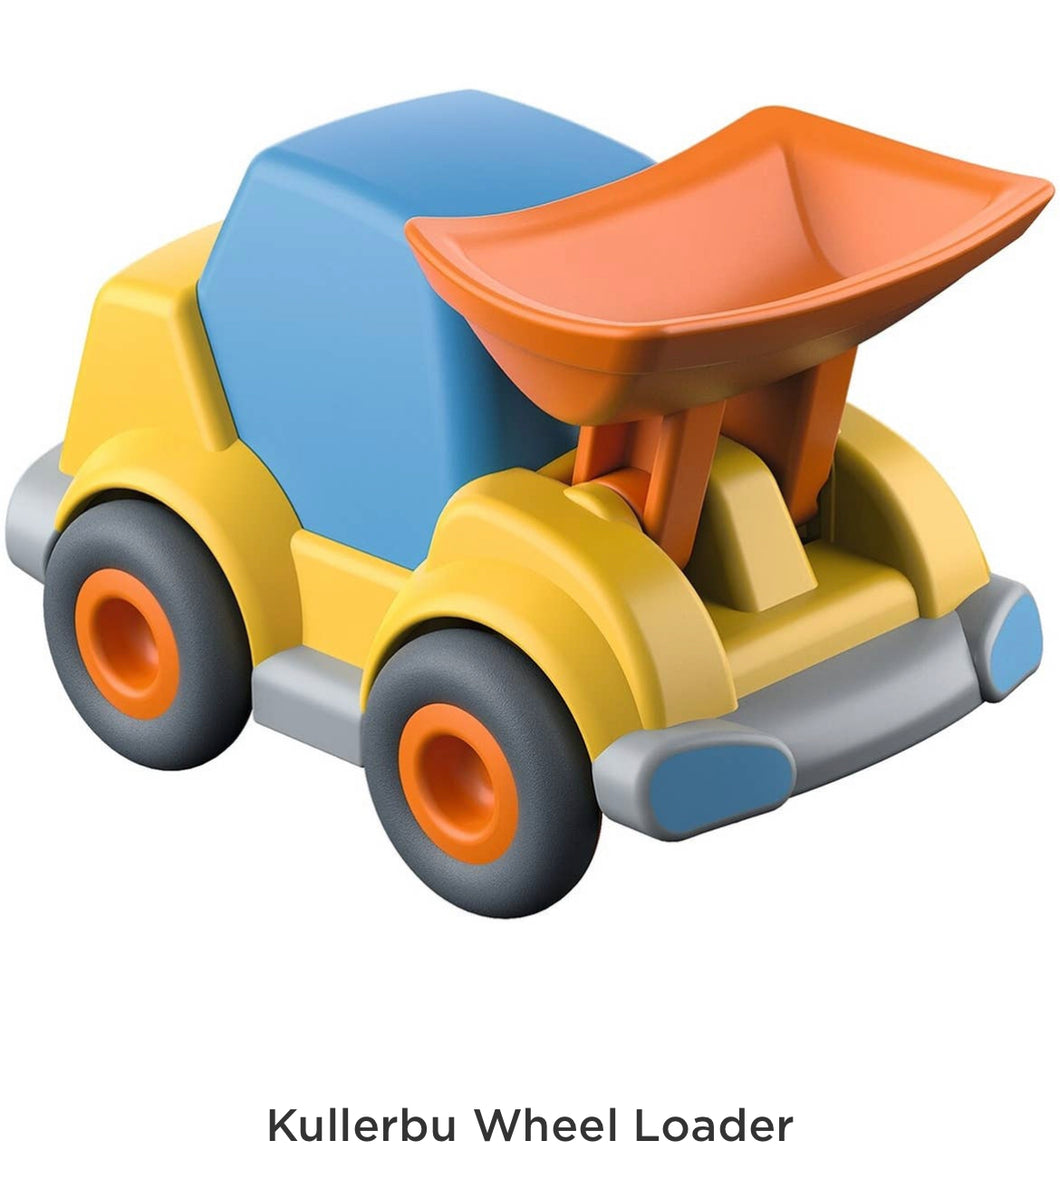 Kellerbu Wheel Loader